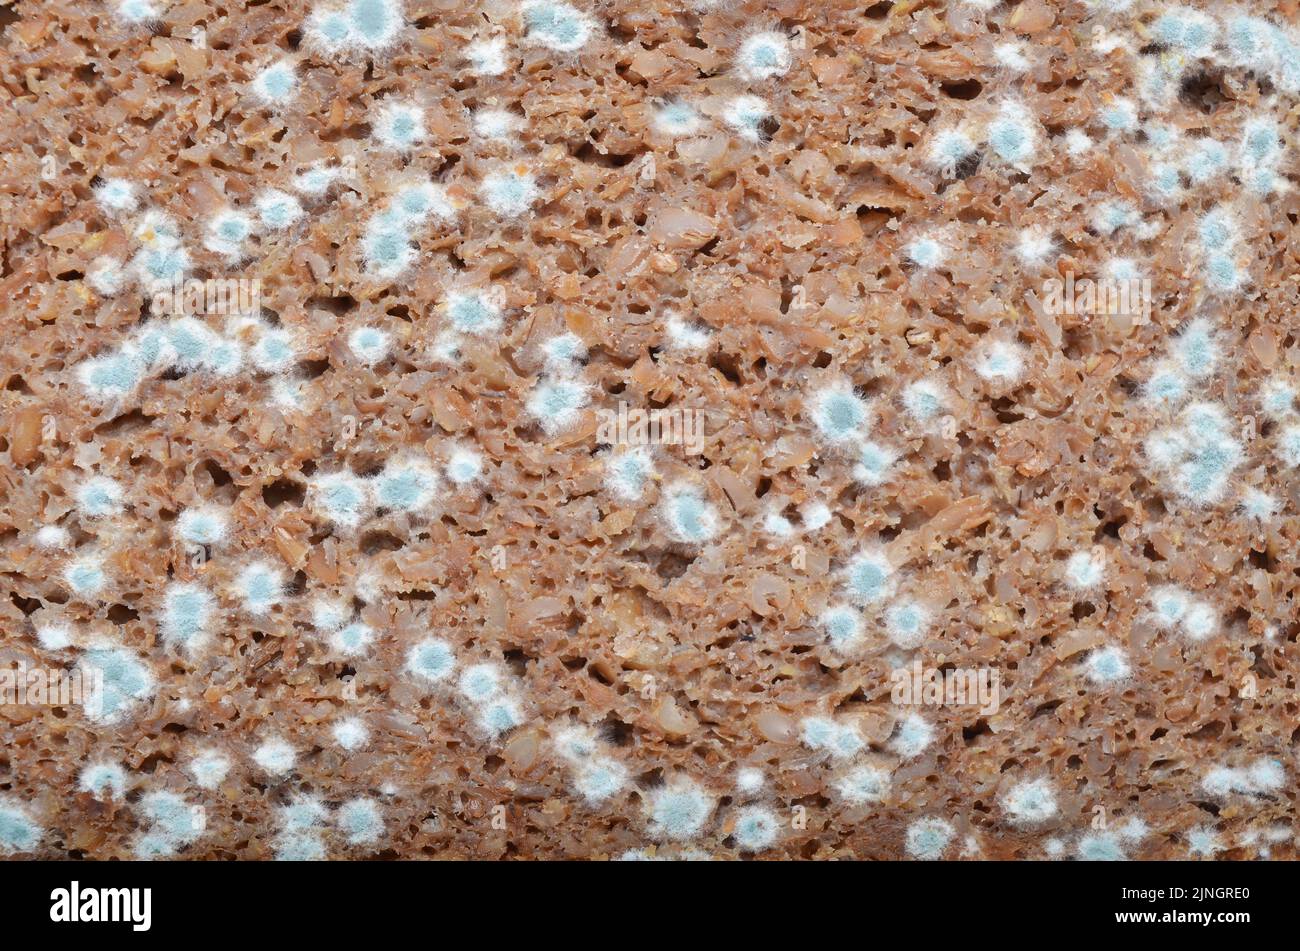 Closeup of mold spores on brown bread Stock Photo